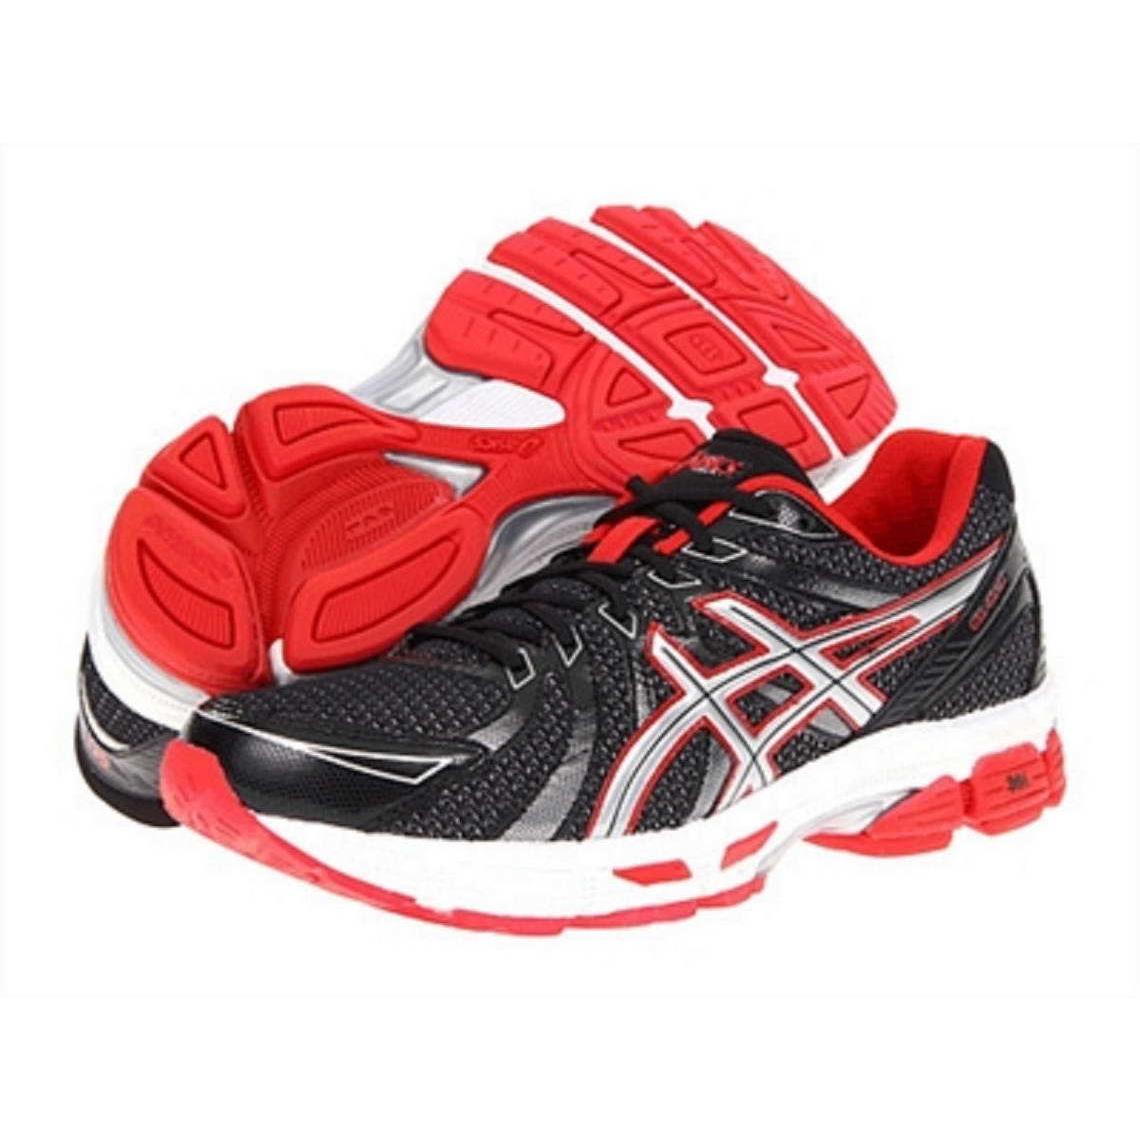 Asics Gel-exalt Black/silver/red Road Running Shoes